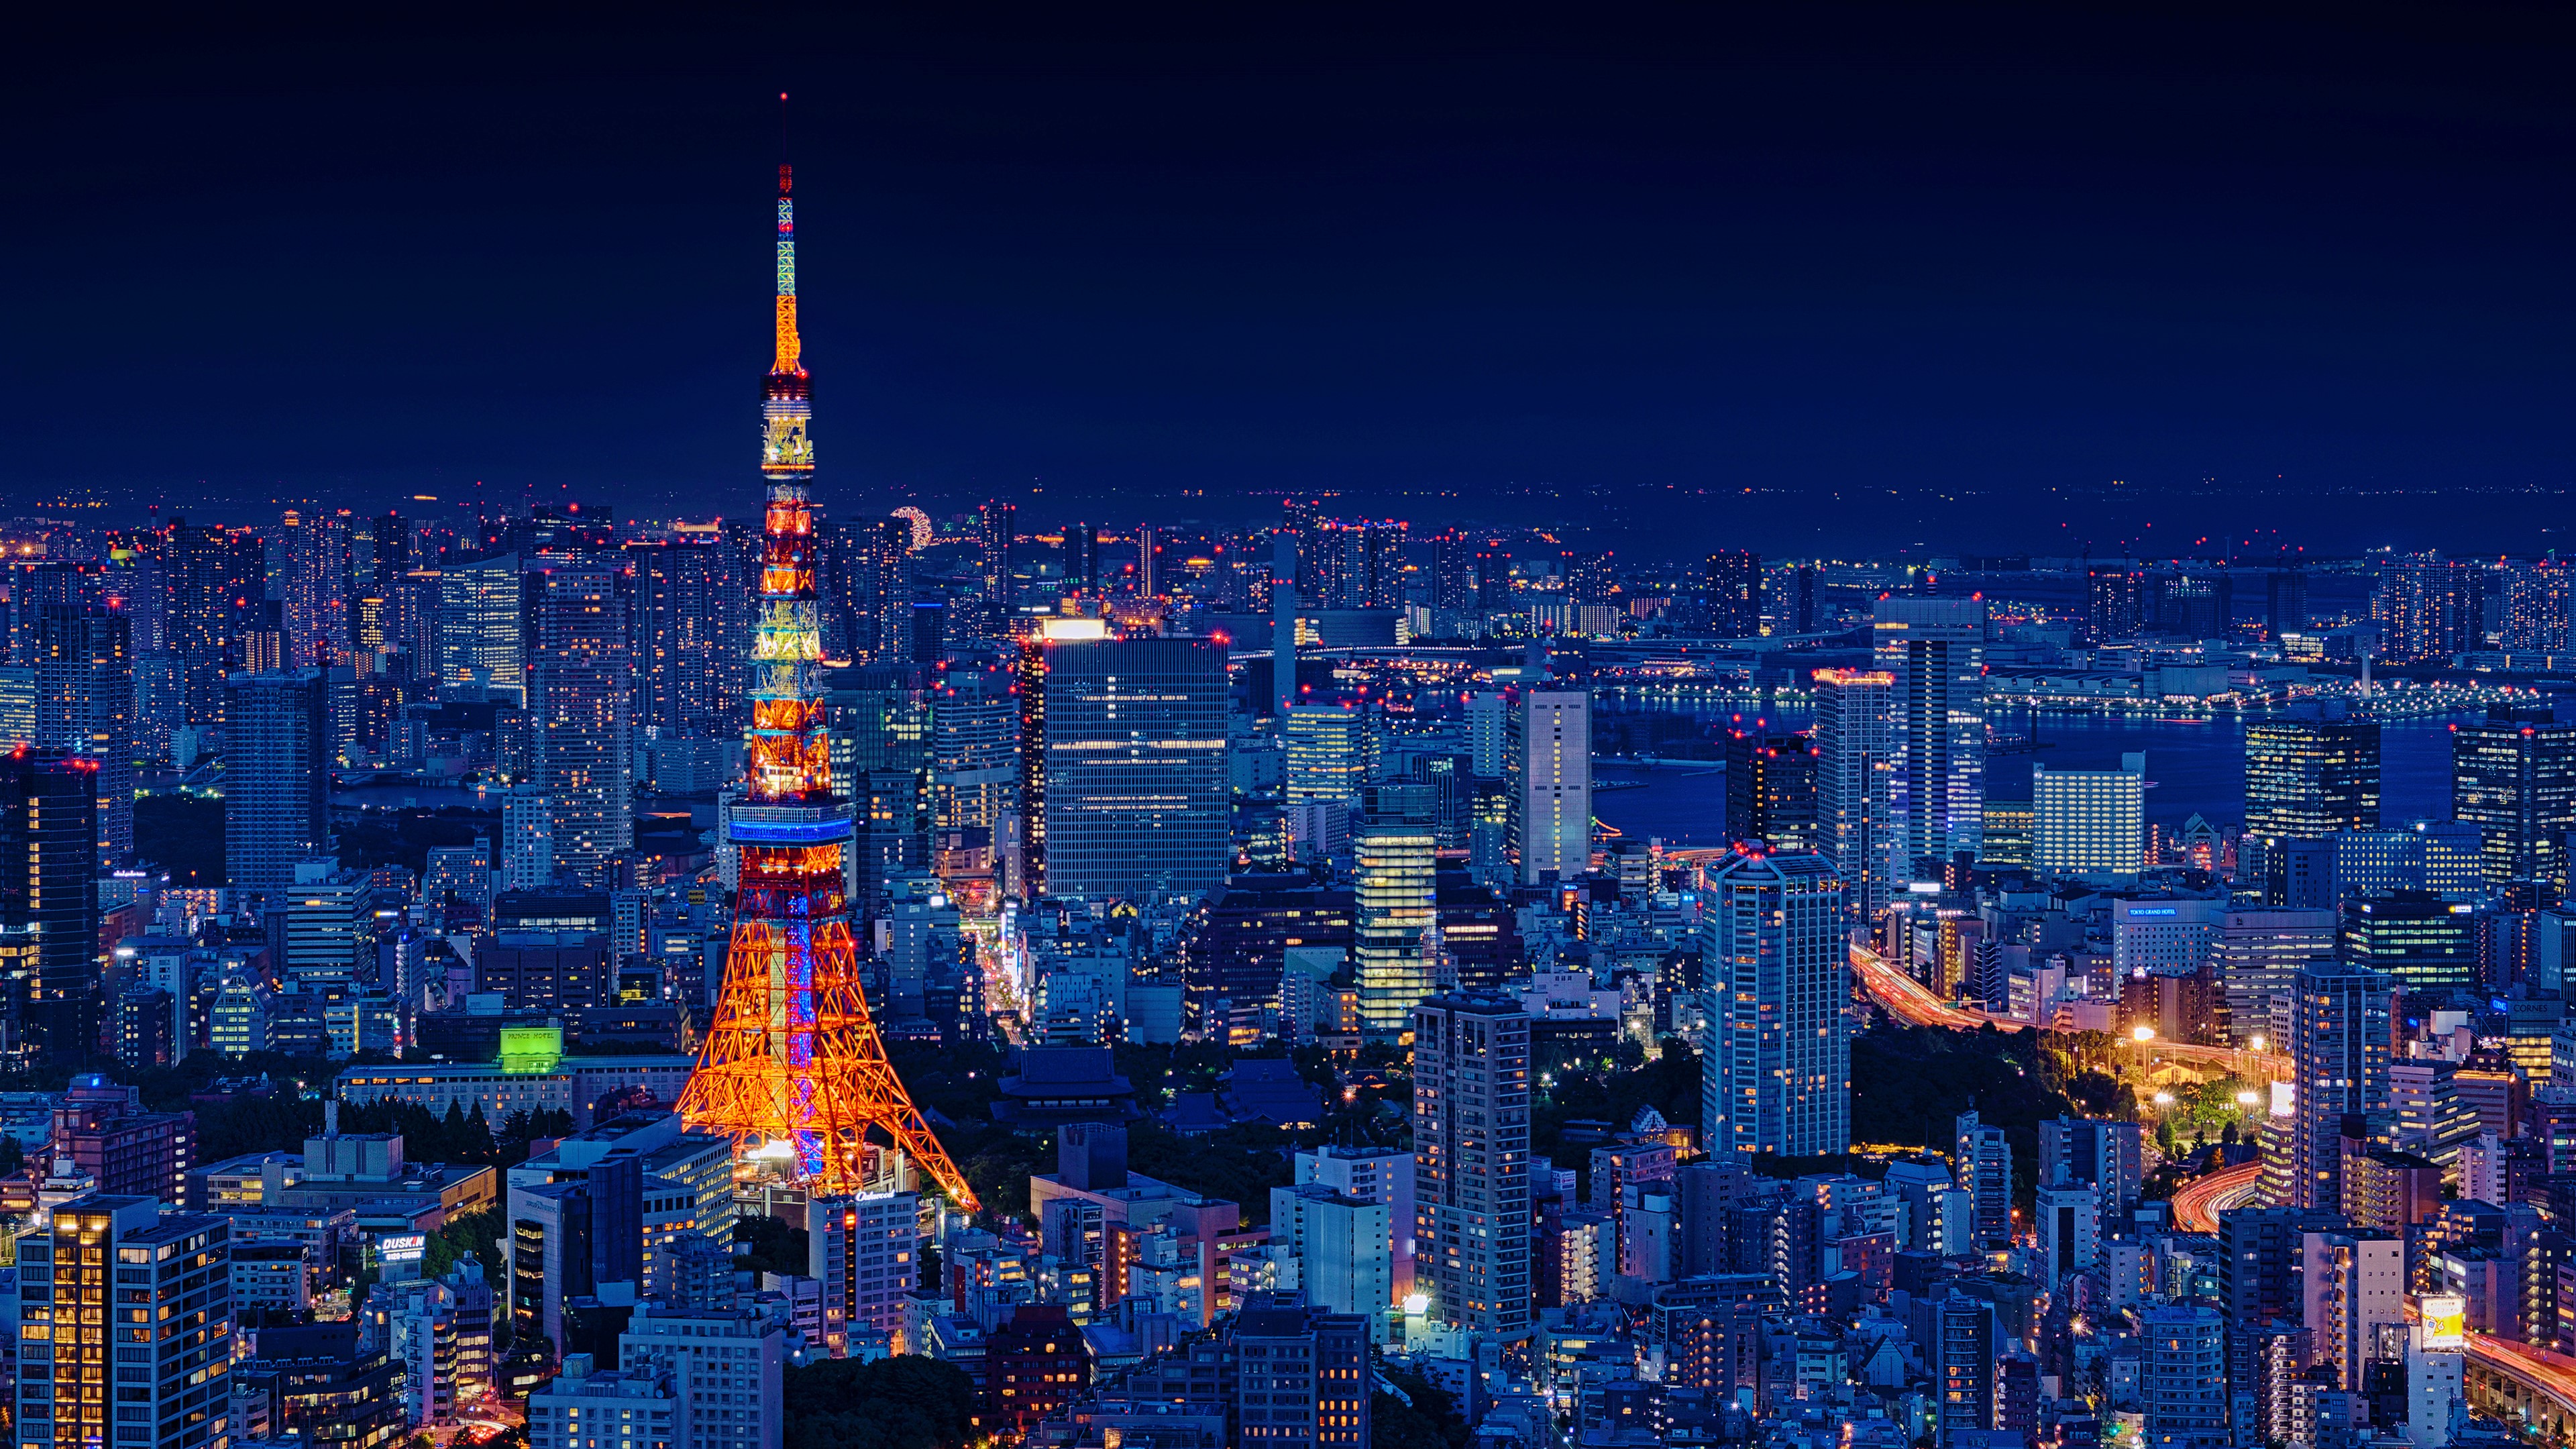 Tokyo At Night 4k Ultra HD Wallpaper Background Image